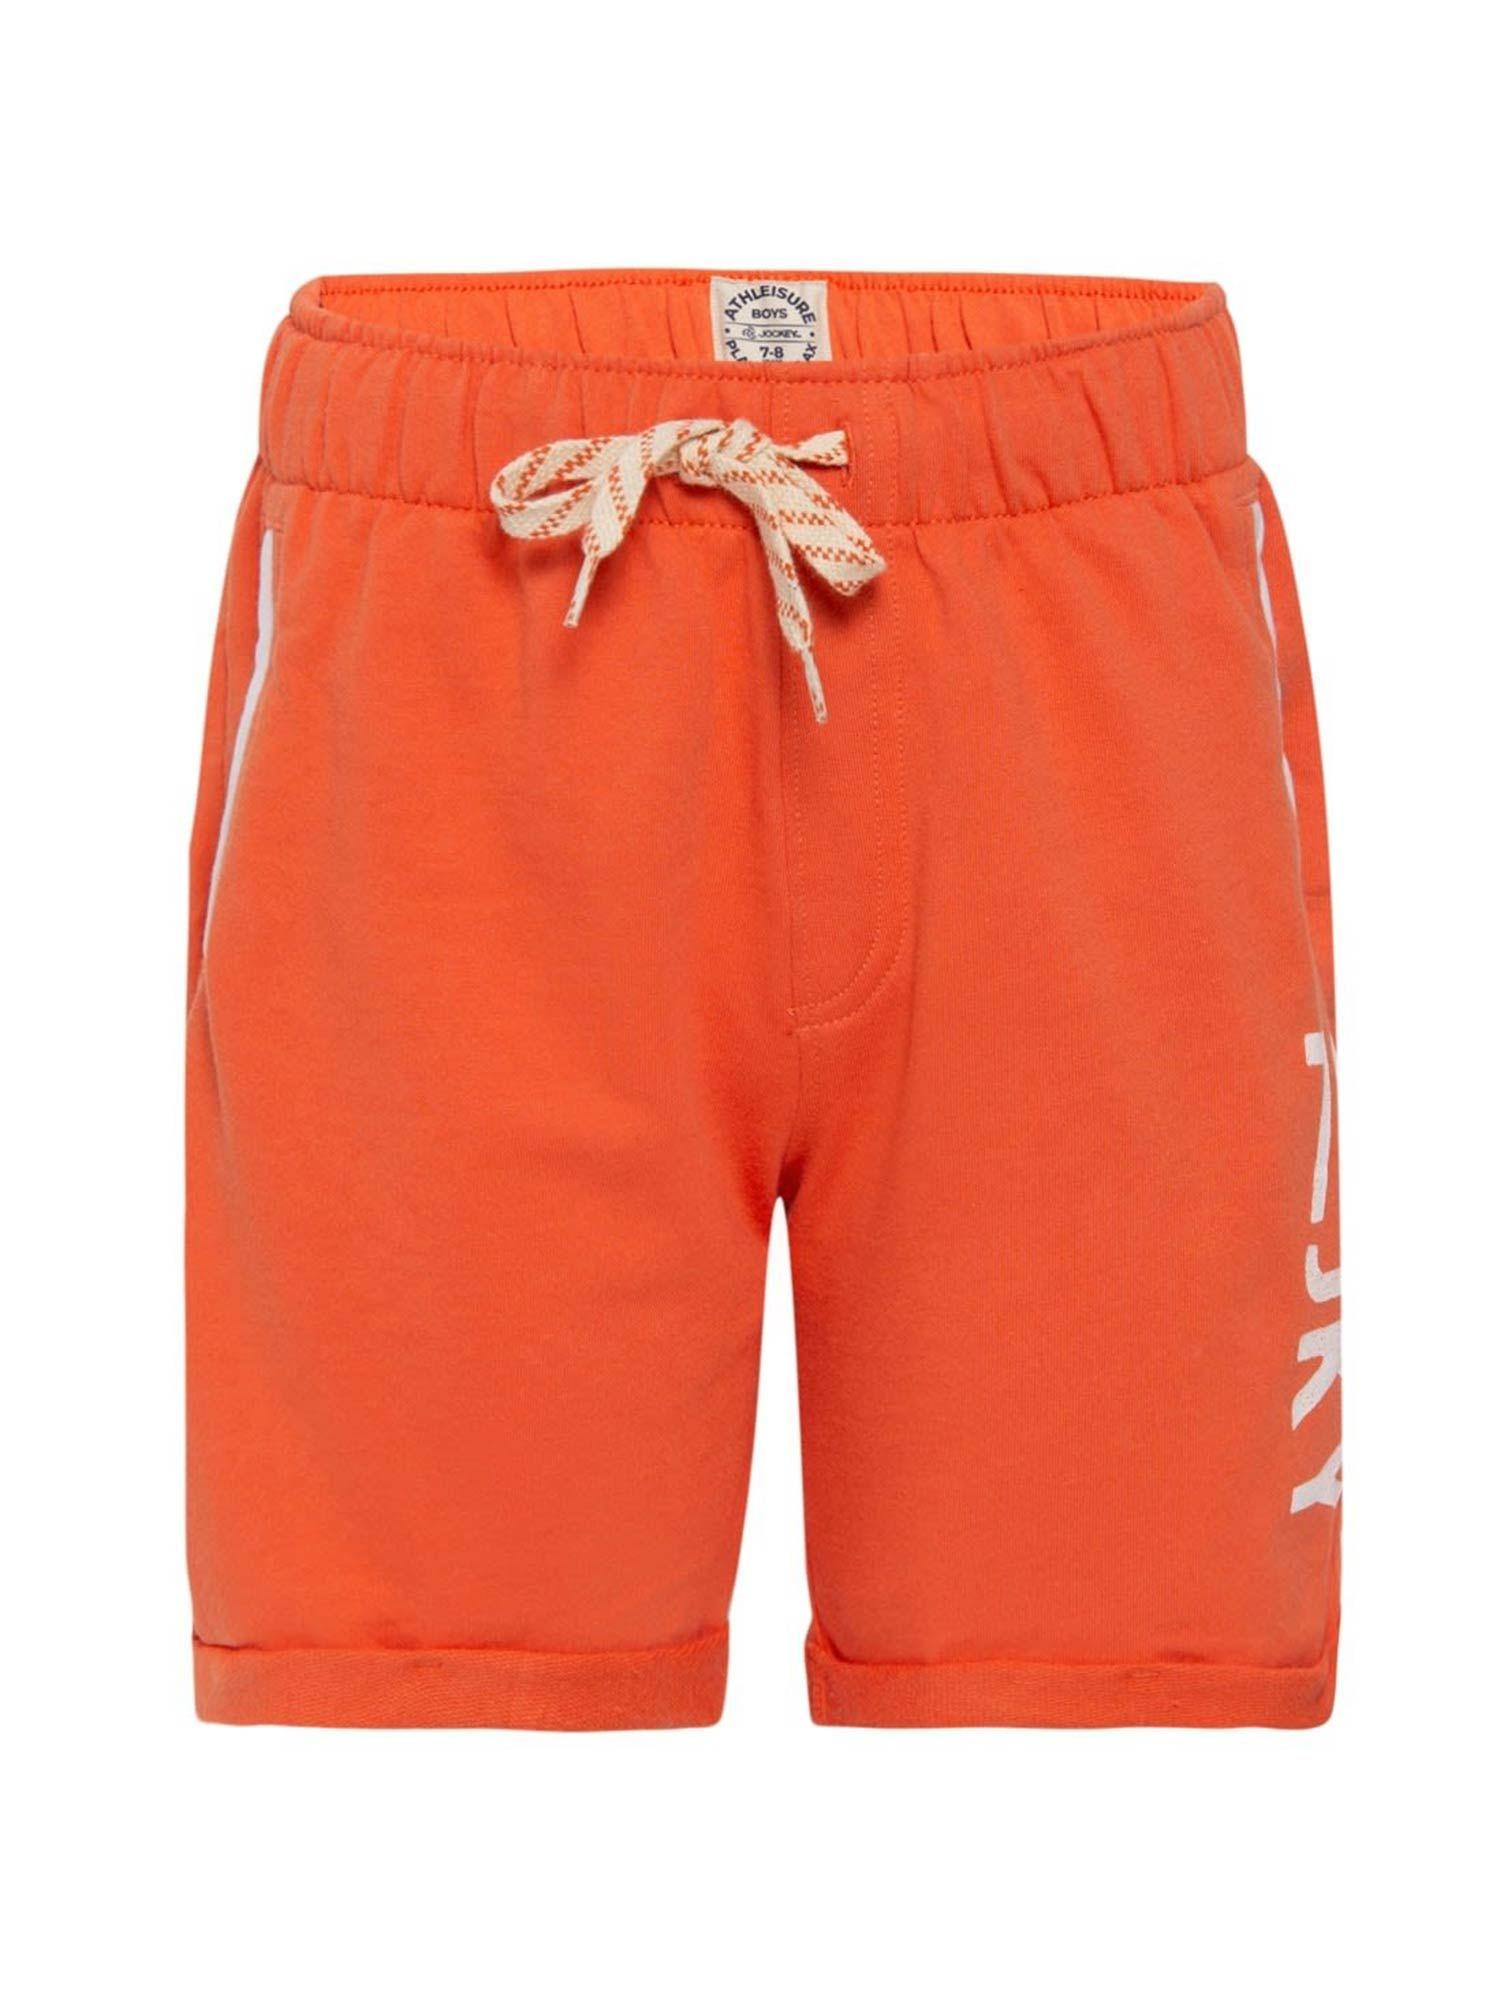 orange solid shorts